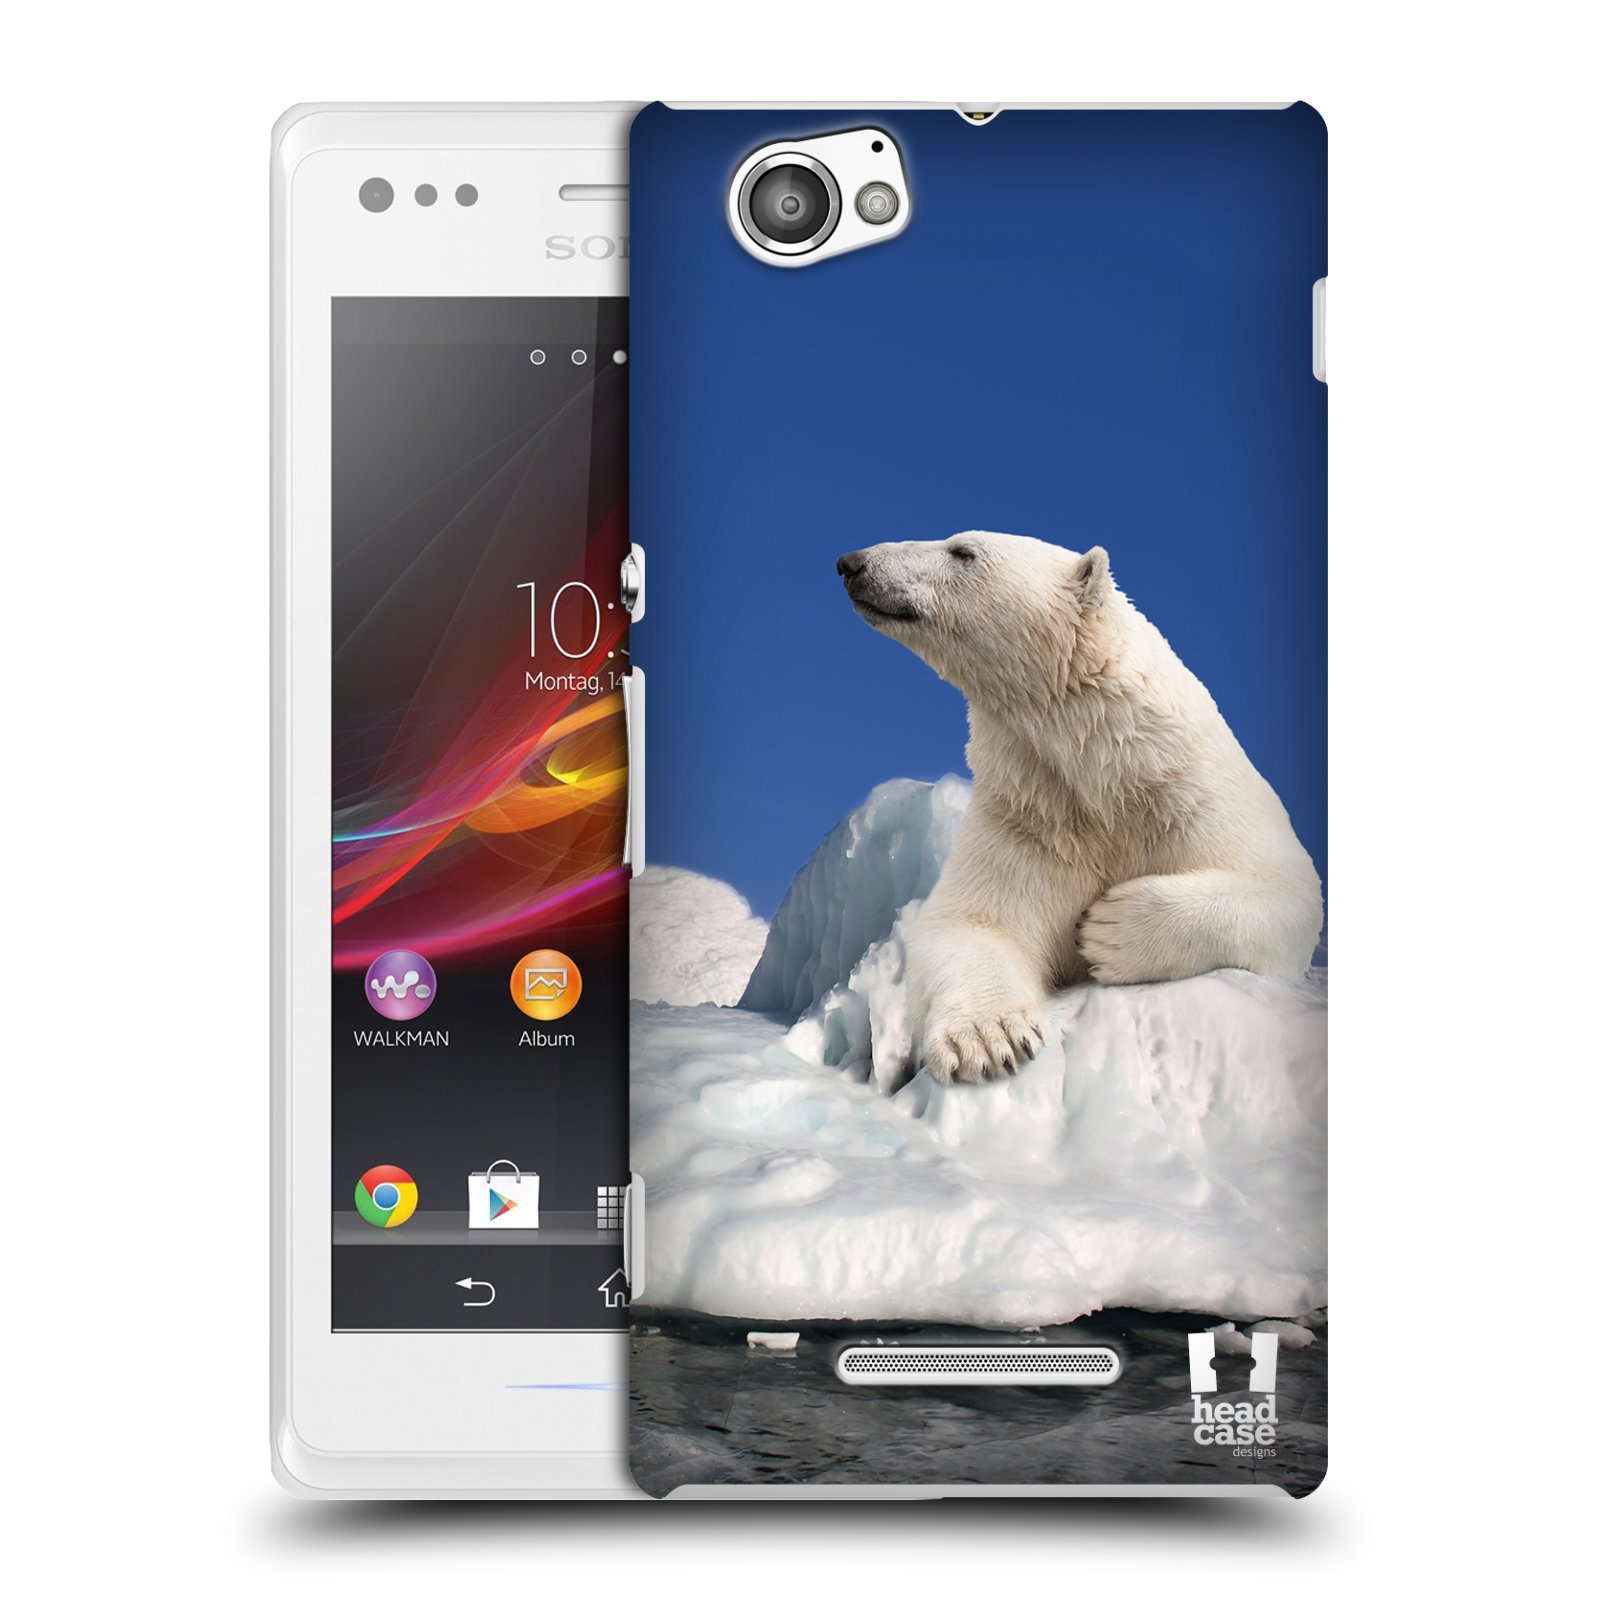 HEAD CASE plastový obal na mobil Sony Xperia M vzor Divočina, Divoký život a zvířata foto LEDNÍ MEDVĚD NA LEDOVCI A NEBE MODRÁ